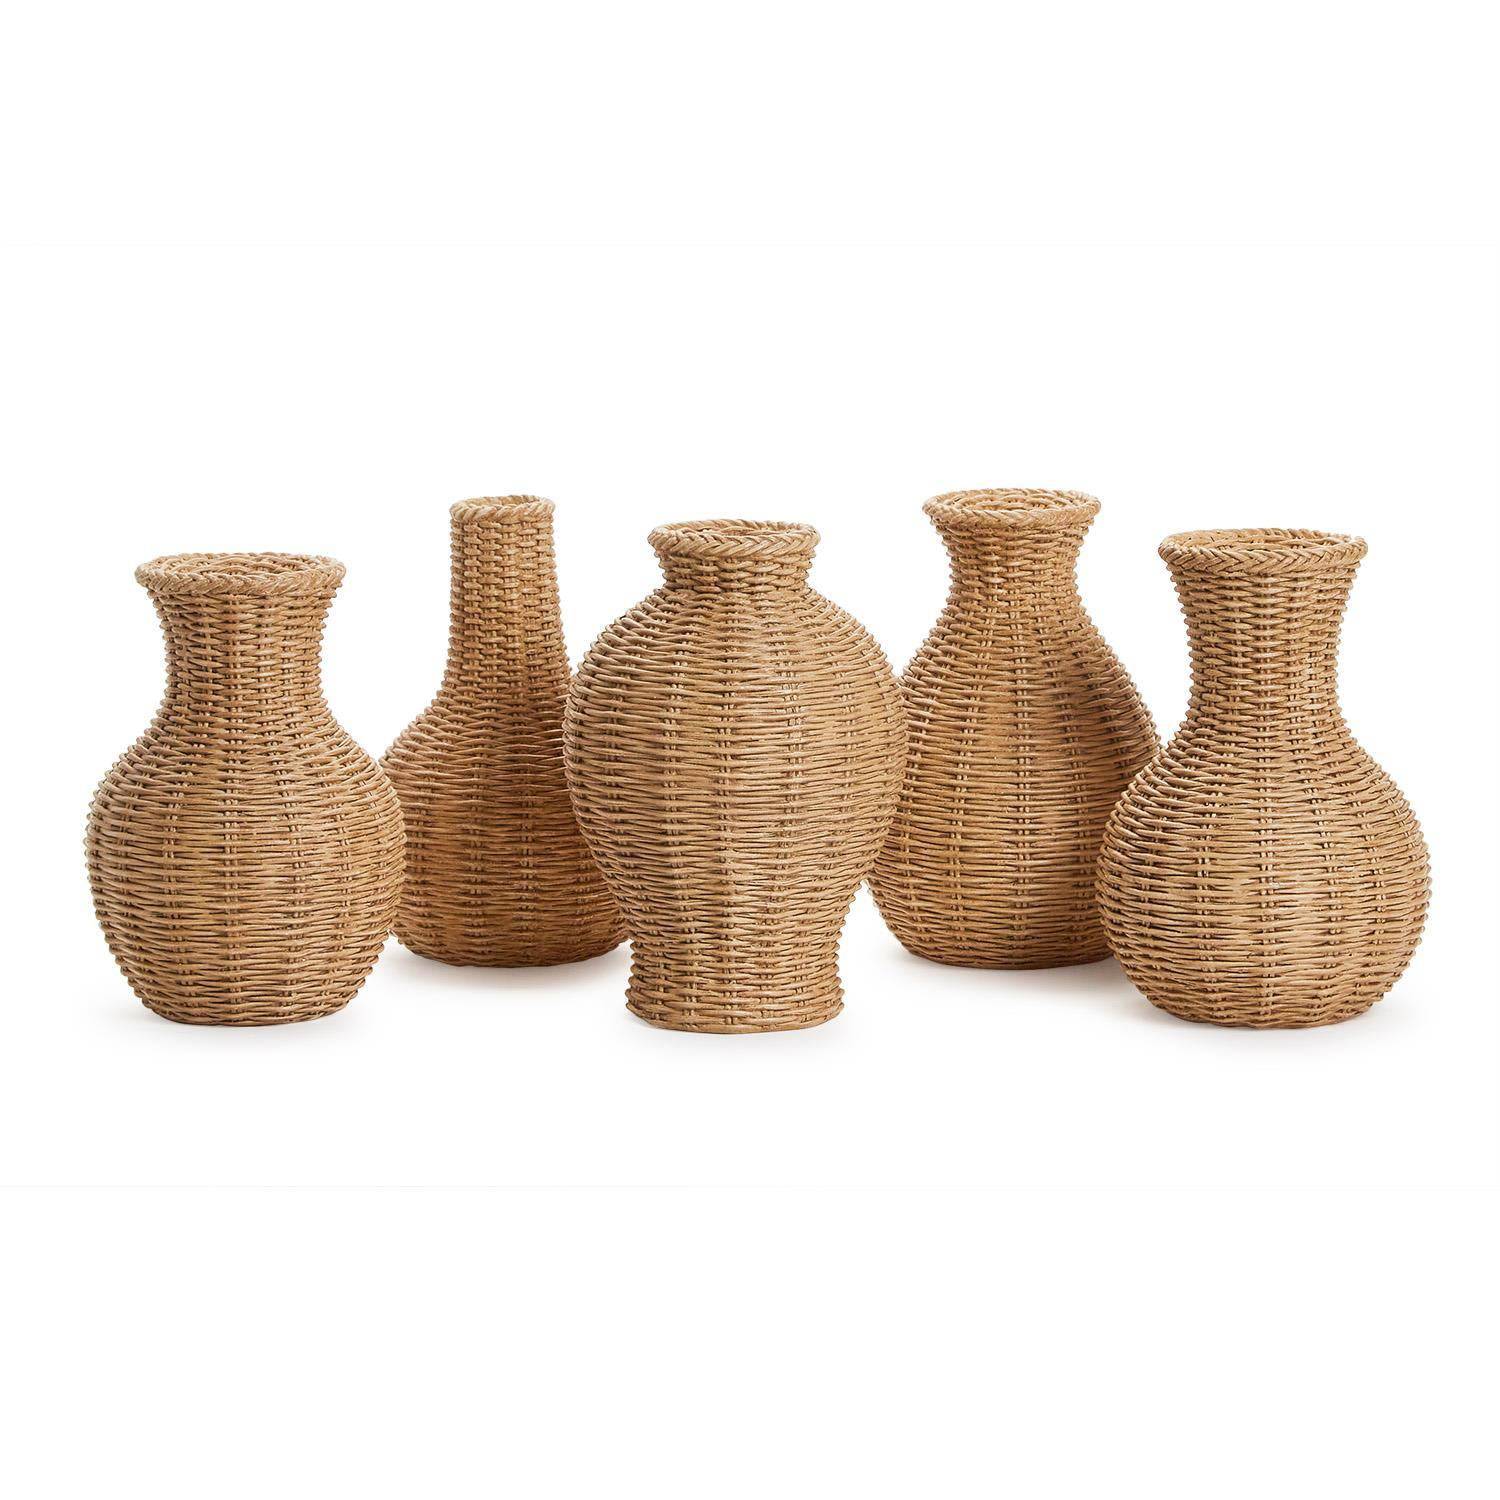 Wicker Pattern Vase Natural - 5 styles - The Preppy Bunny